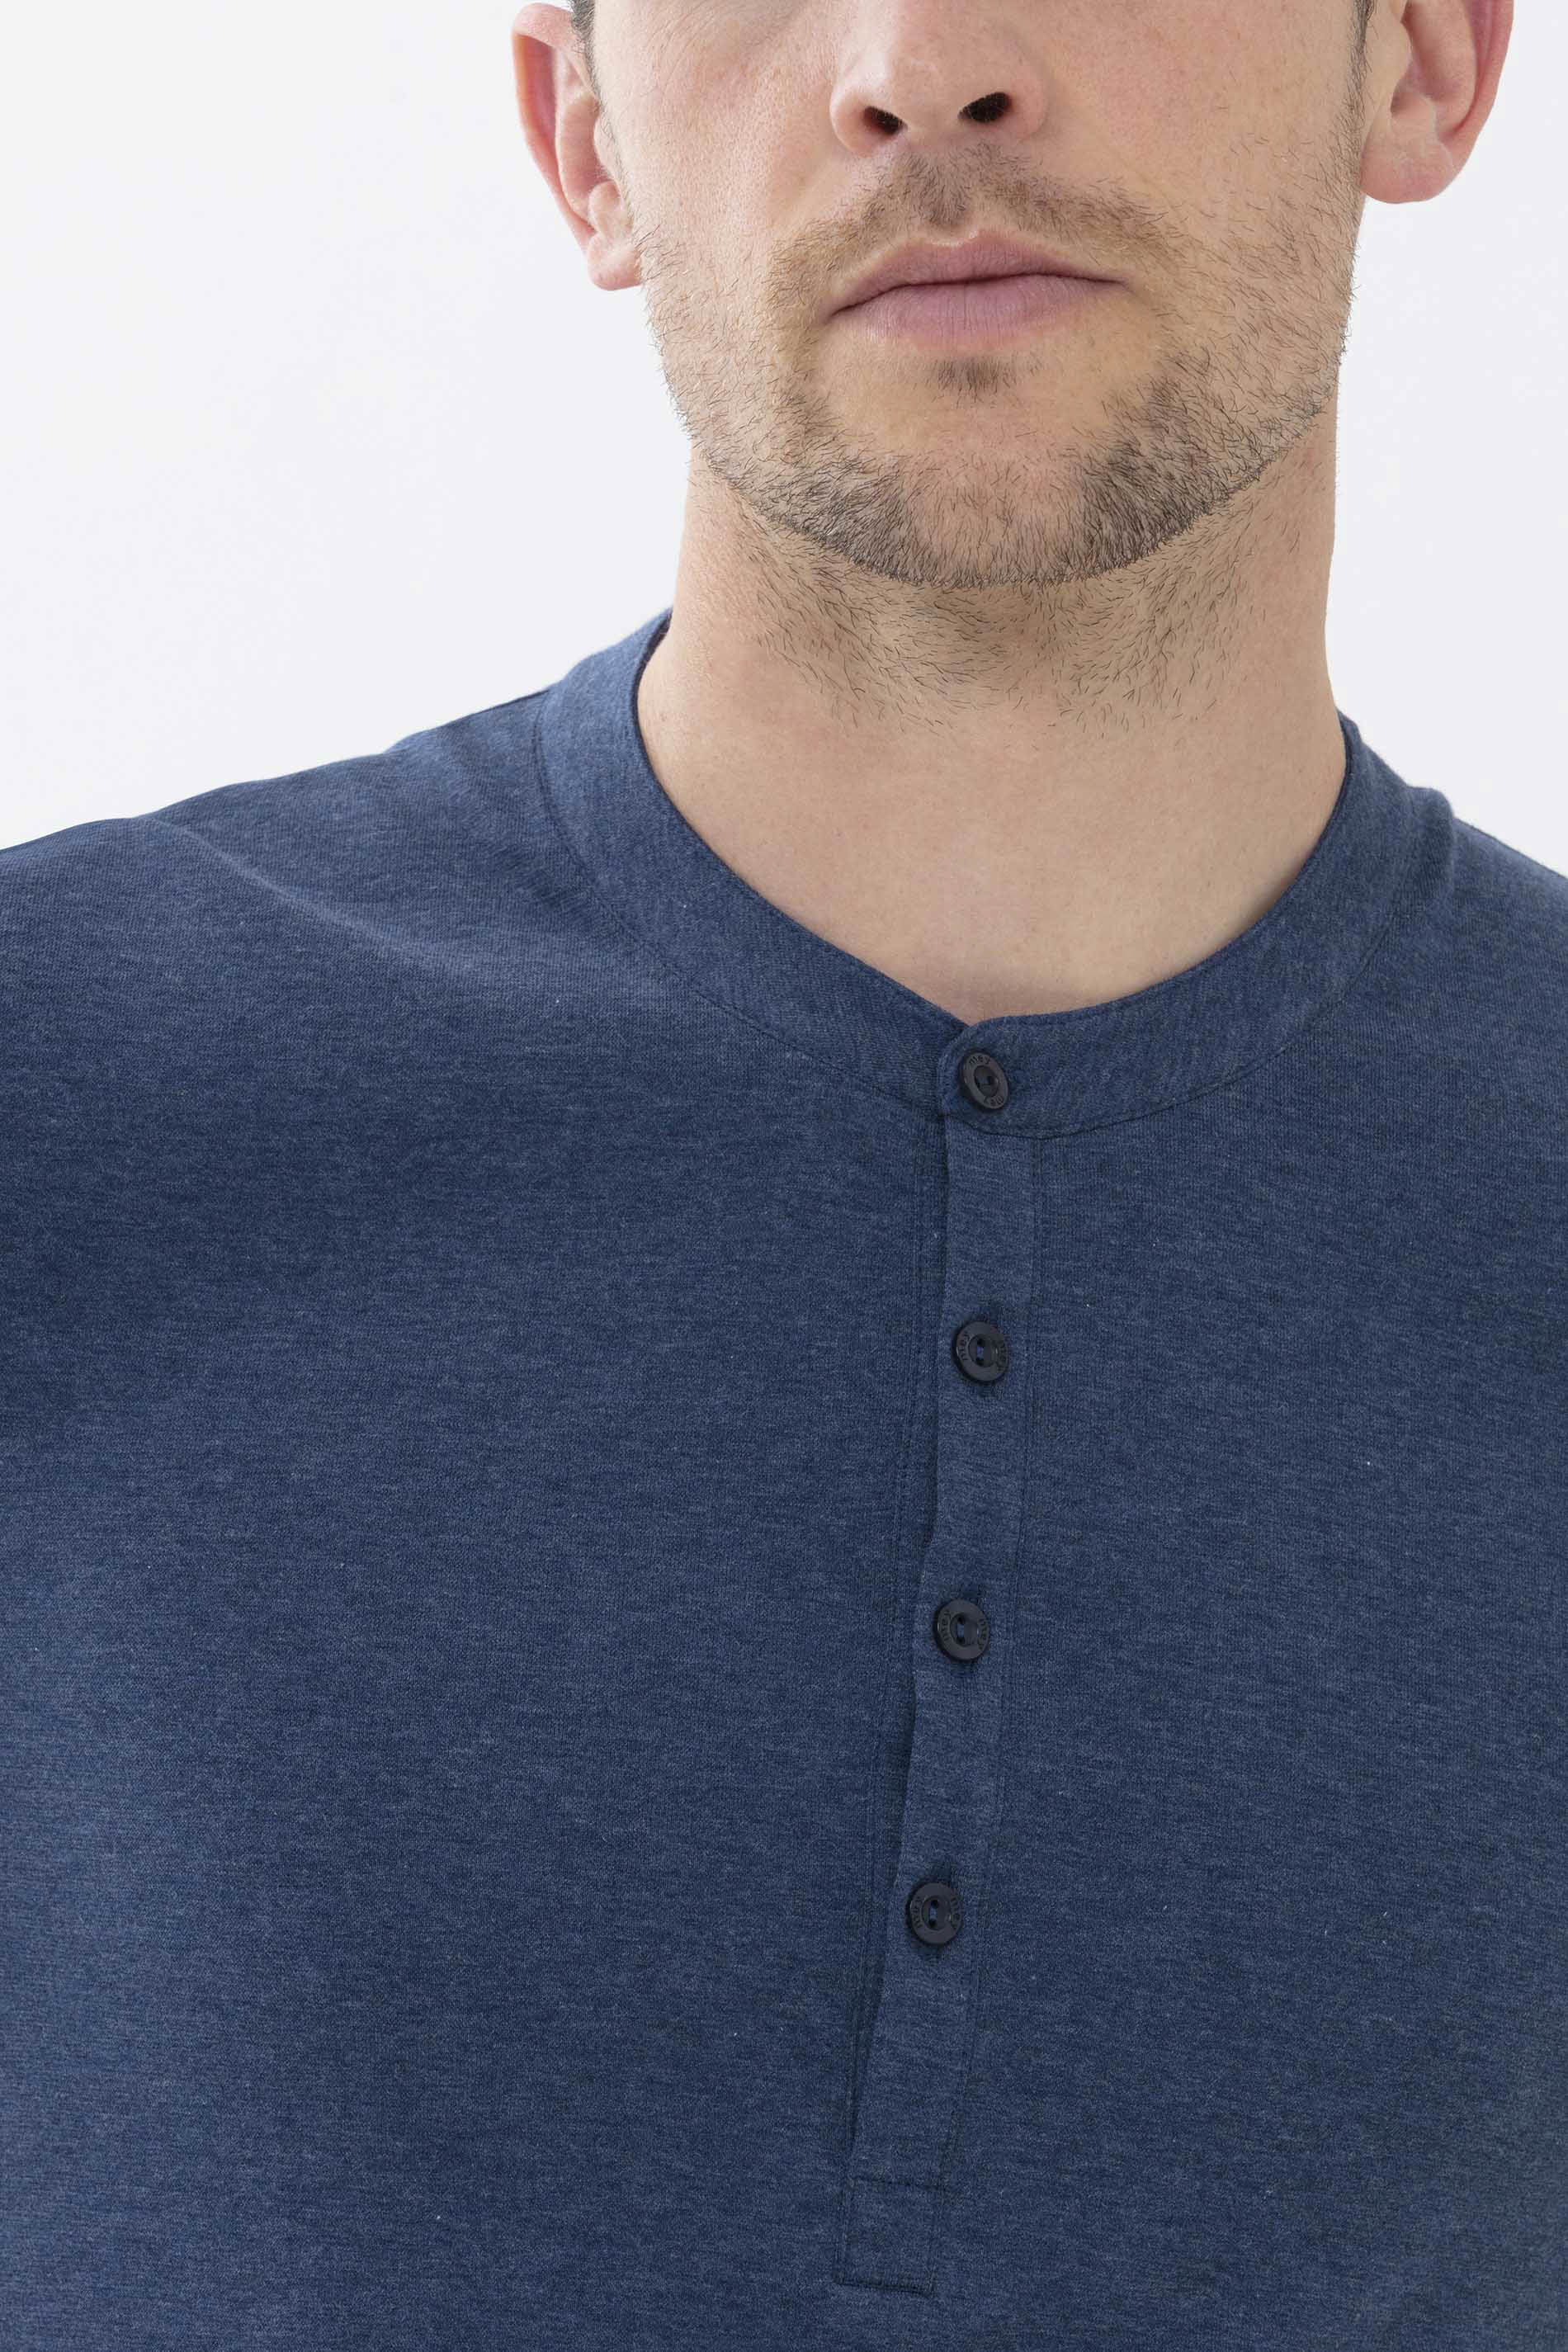 Long-sleeved shirt Denim Blue Serie Ringwood Colour Detail View 01 | mey®